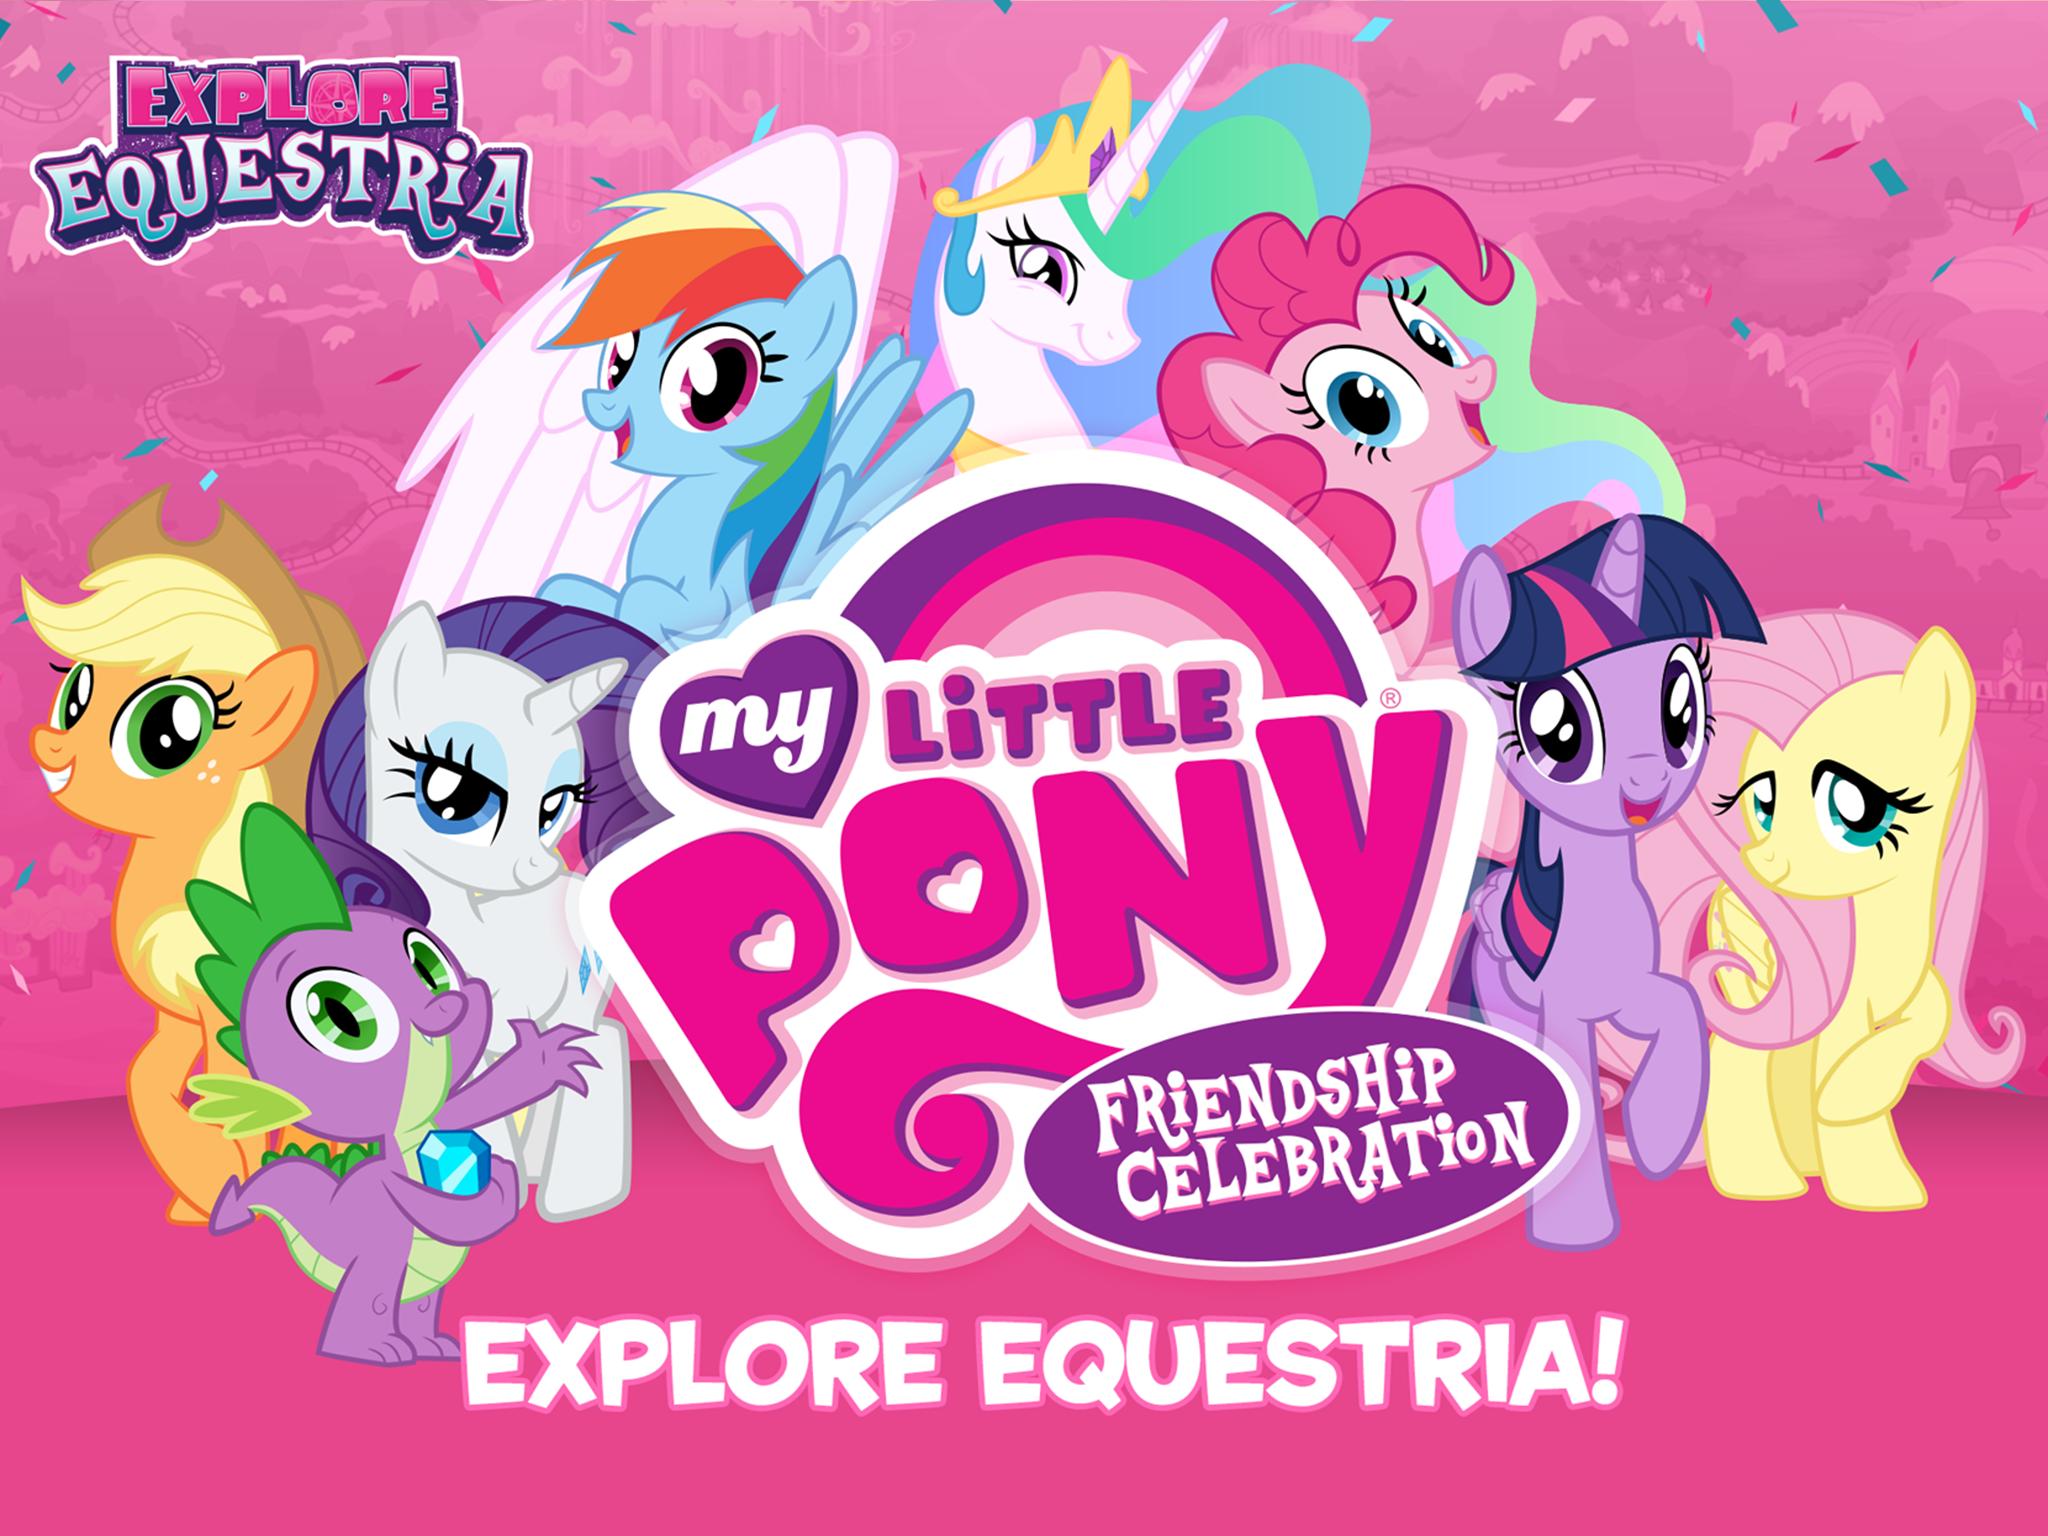 Pony friendship celebration. My little Pony Celebration игра. My little Pony Celebration игрушки. MLP праздник дружбы. Пони фестиваль дружбы.